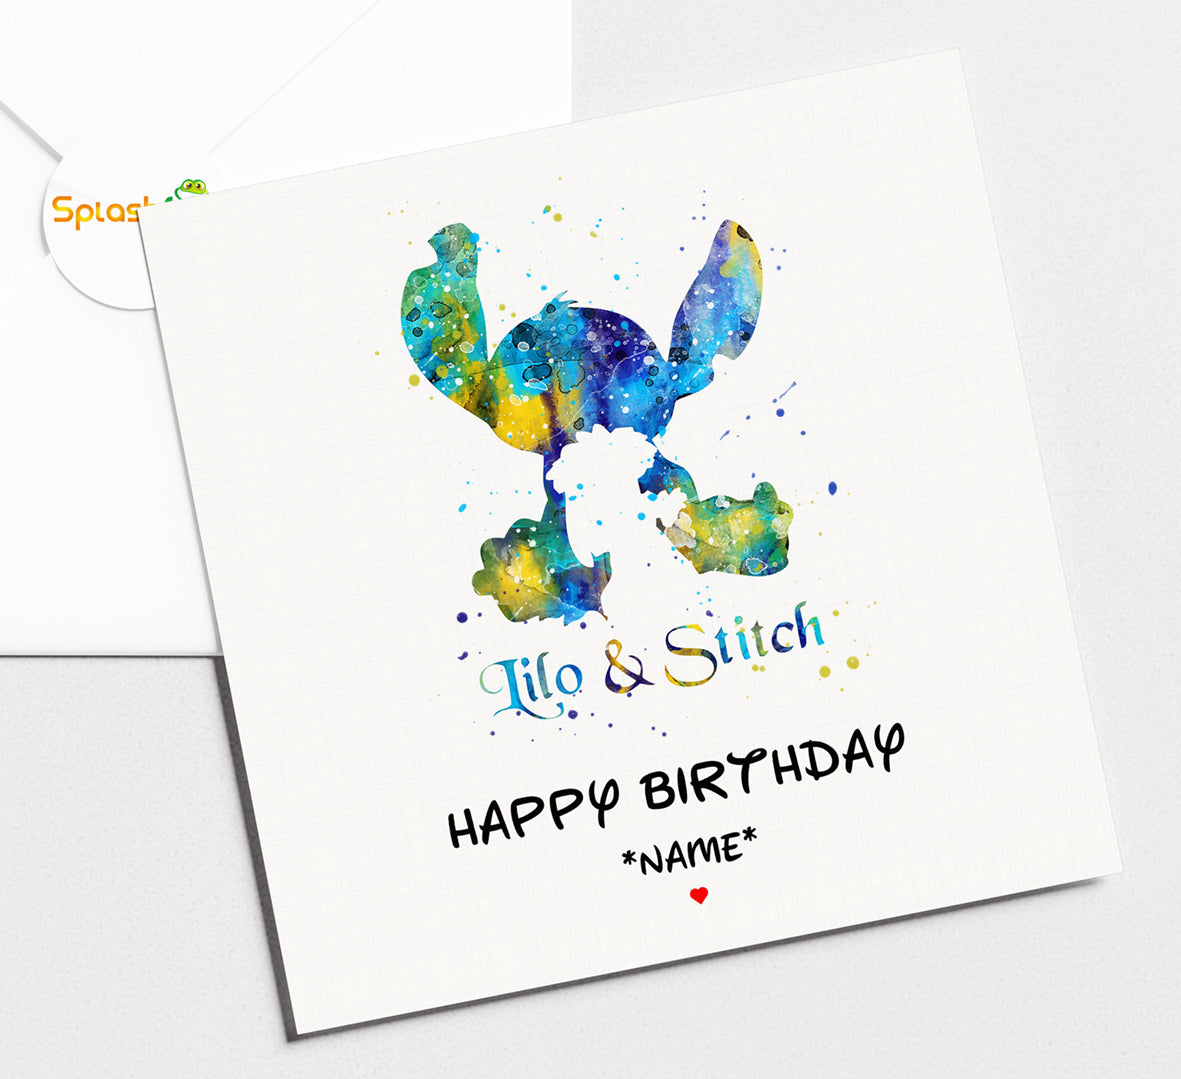 Lilo & Stitch - Birthday Card #401